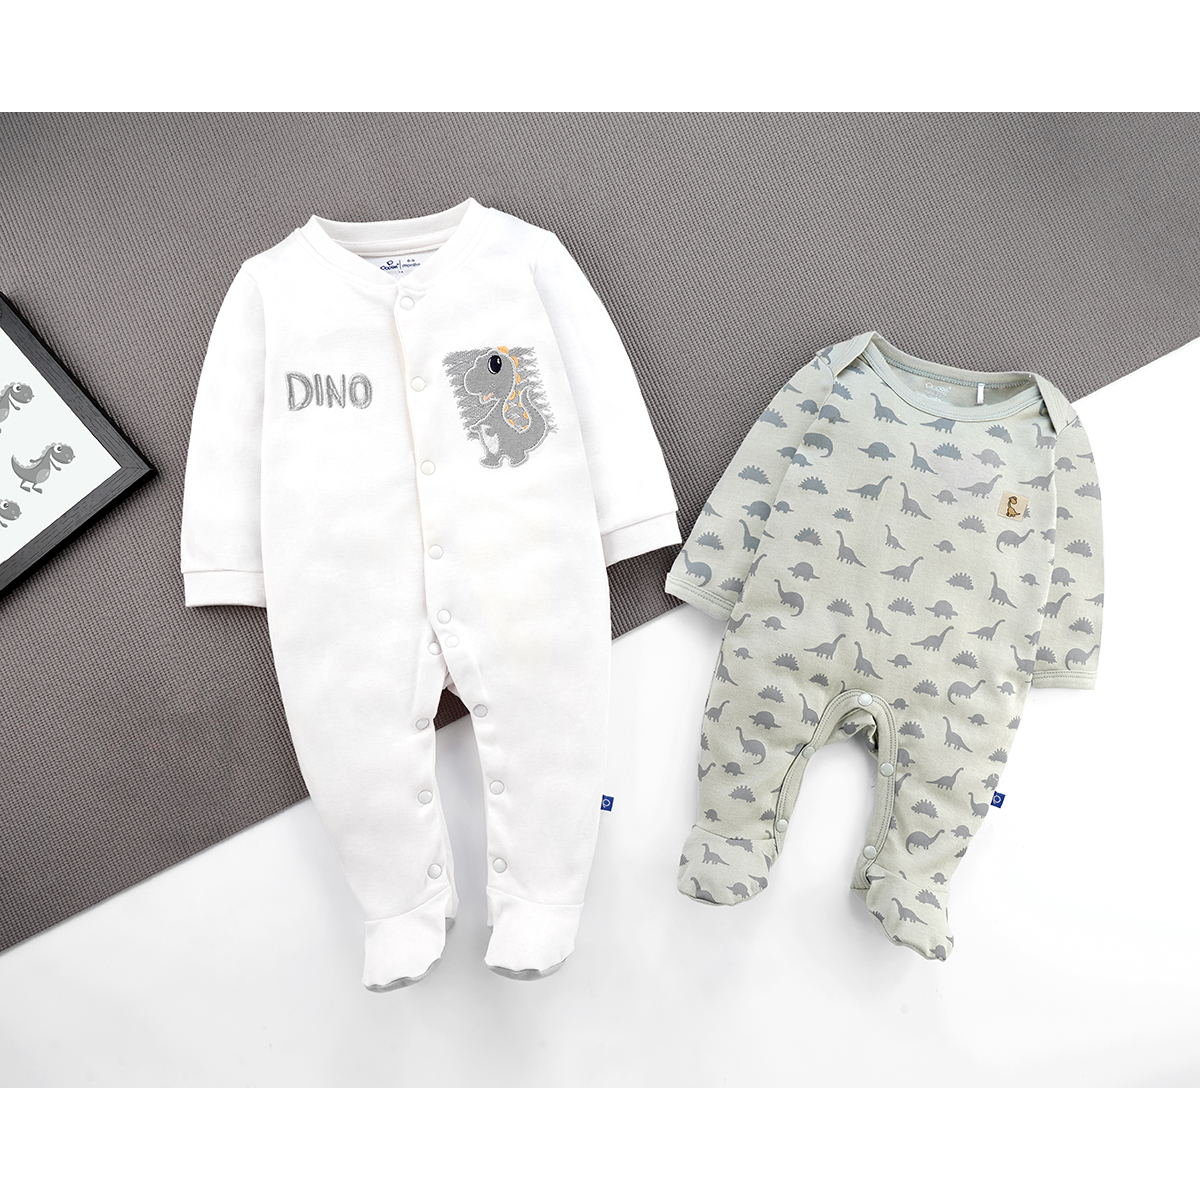 CLETA-2PC Sleep-suit set (Boys, 0-3 Months) - B & T Collections